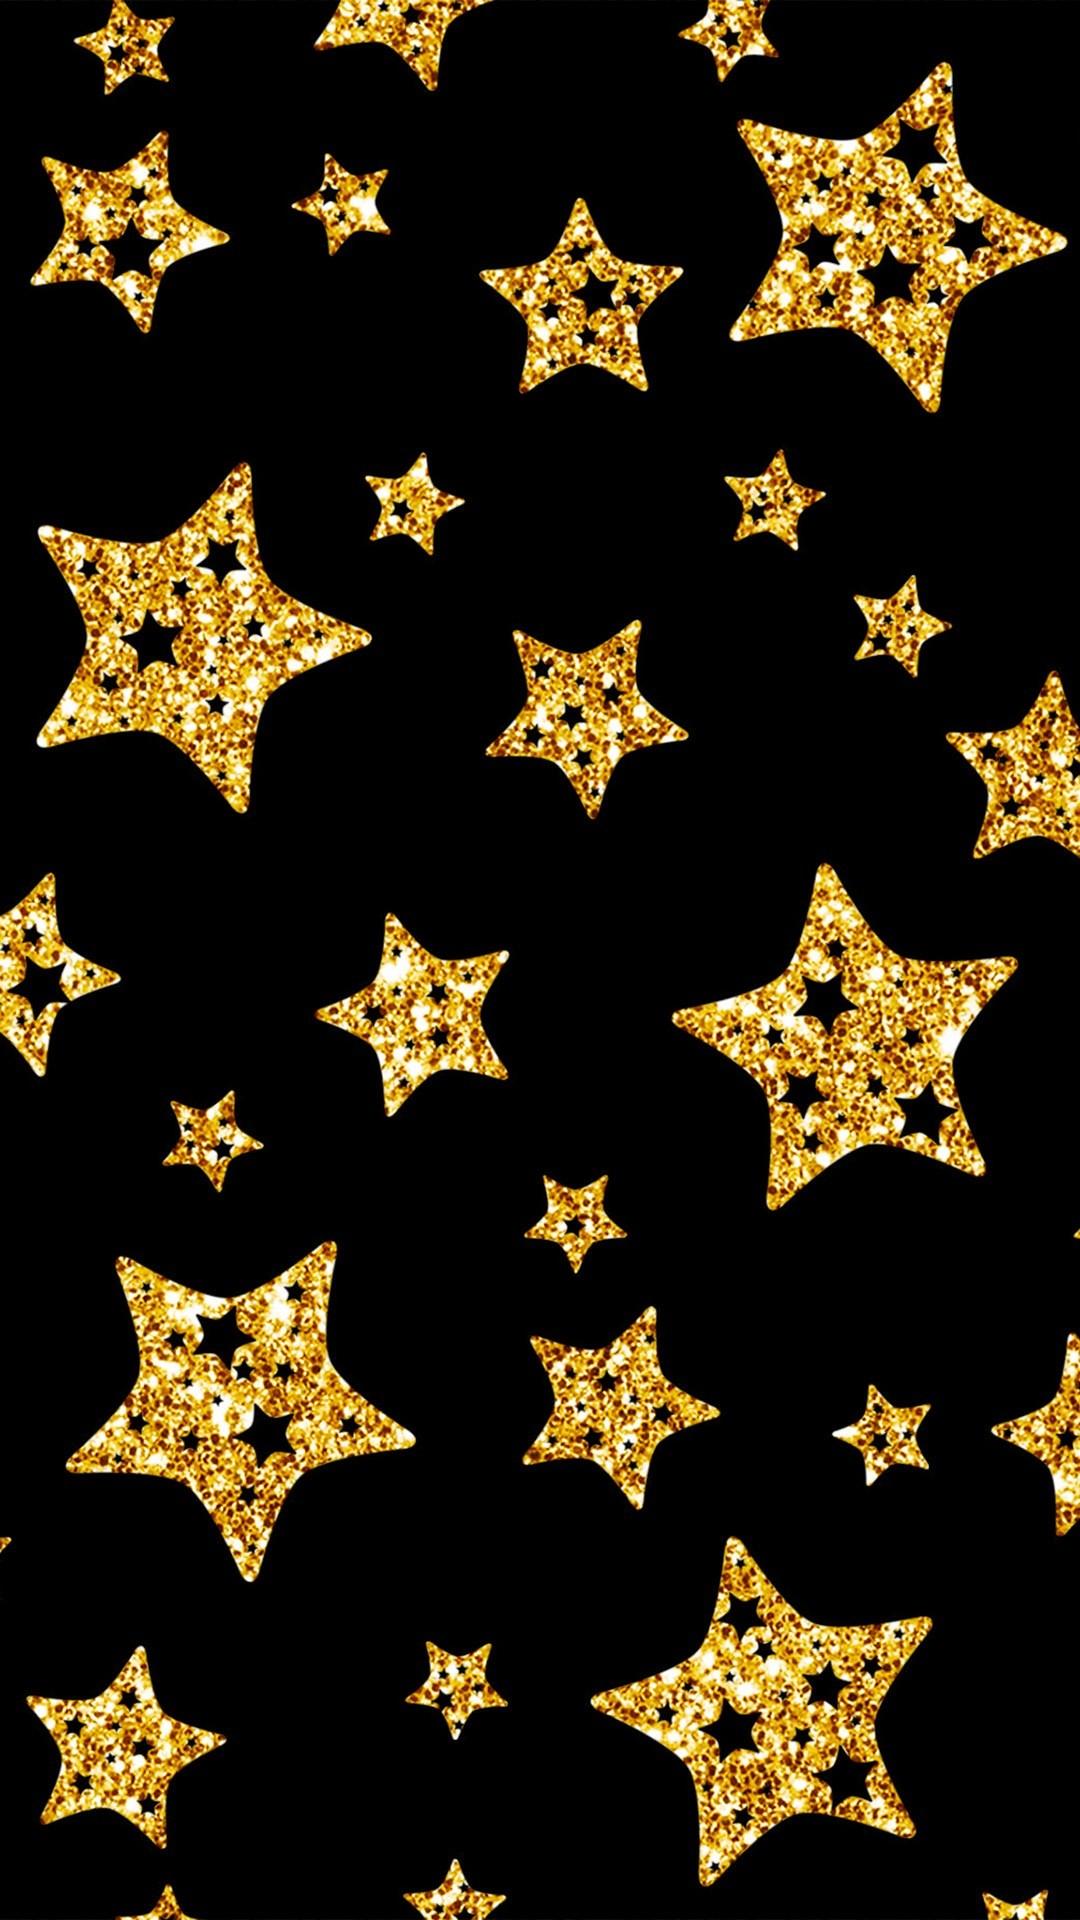 Golden stars on a black background - Gold